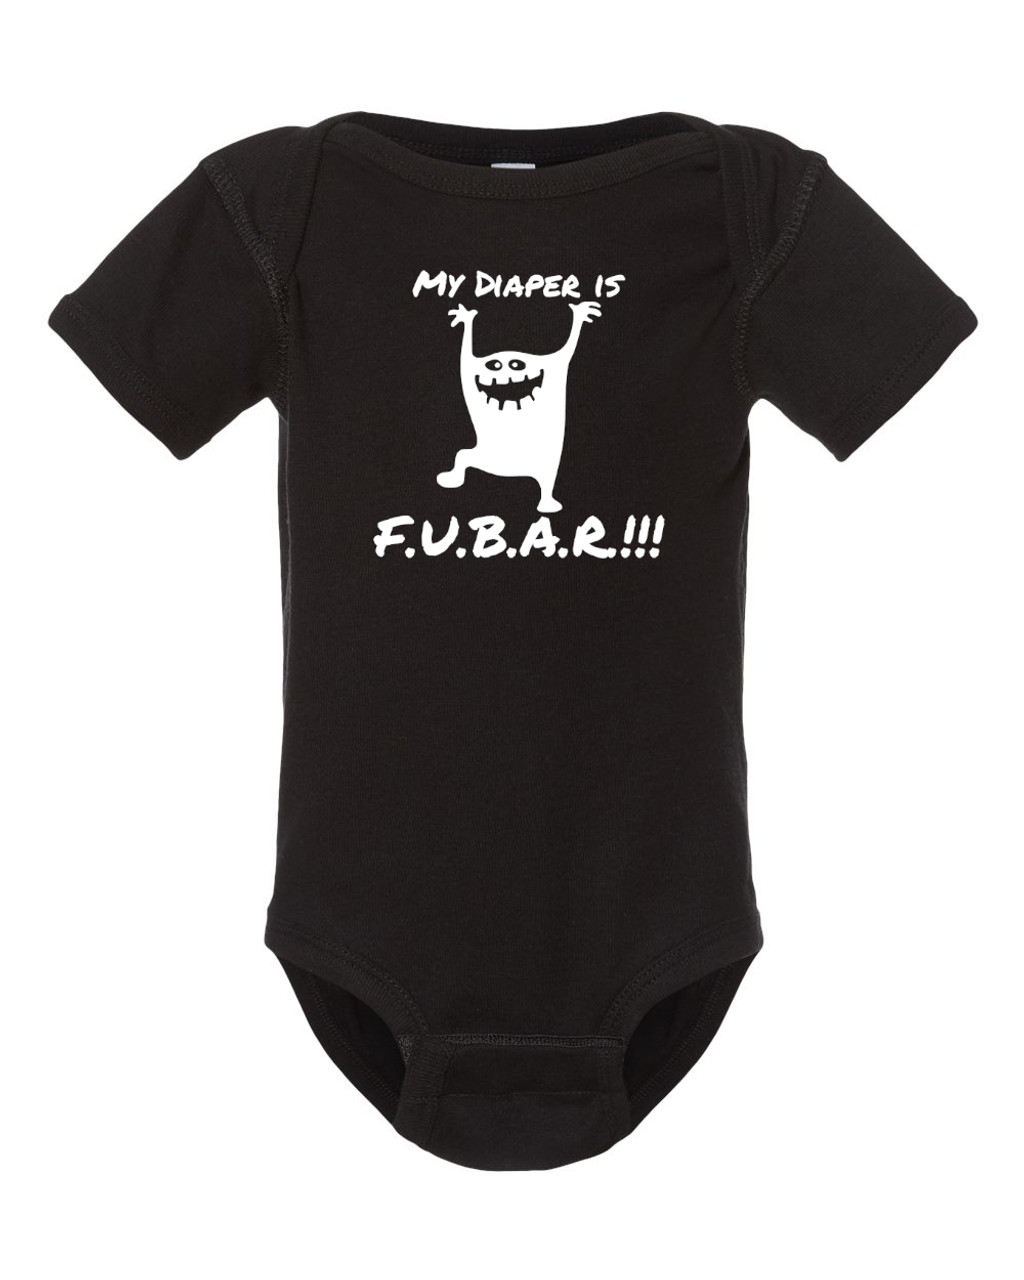 Funny Diaper is Fubar Baby Onesie & Infant Black Short Sleeve Bodysuit